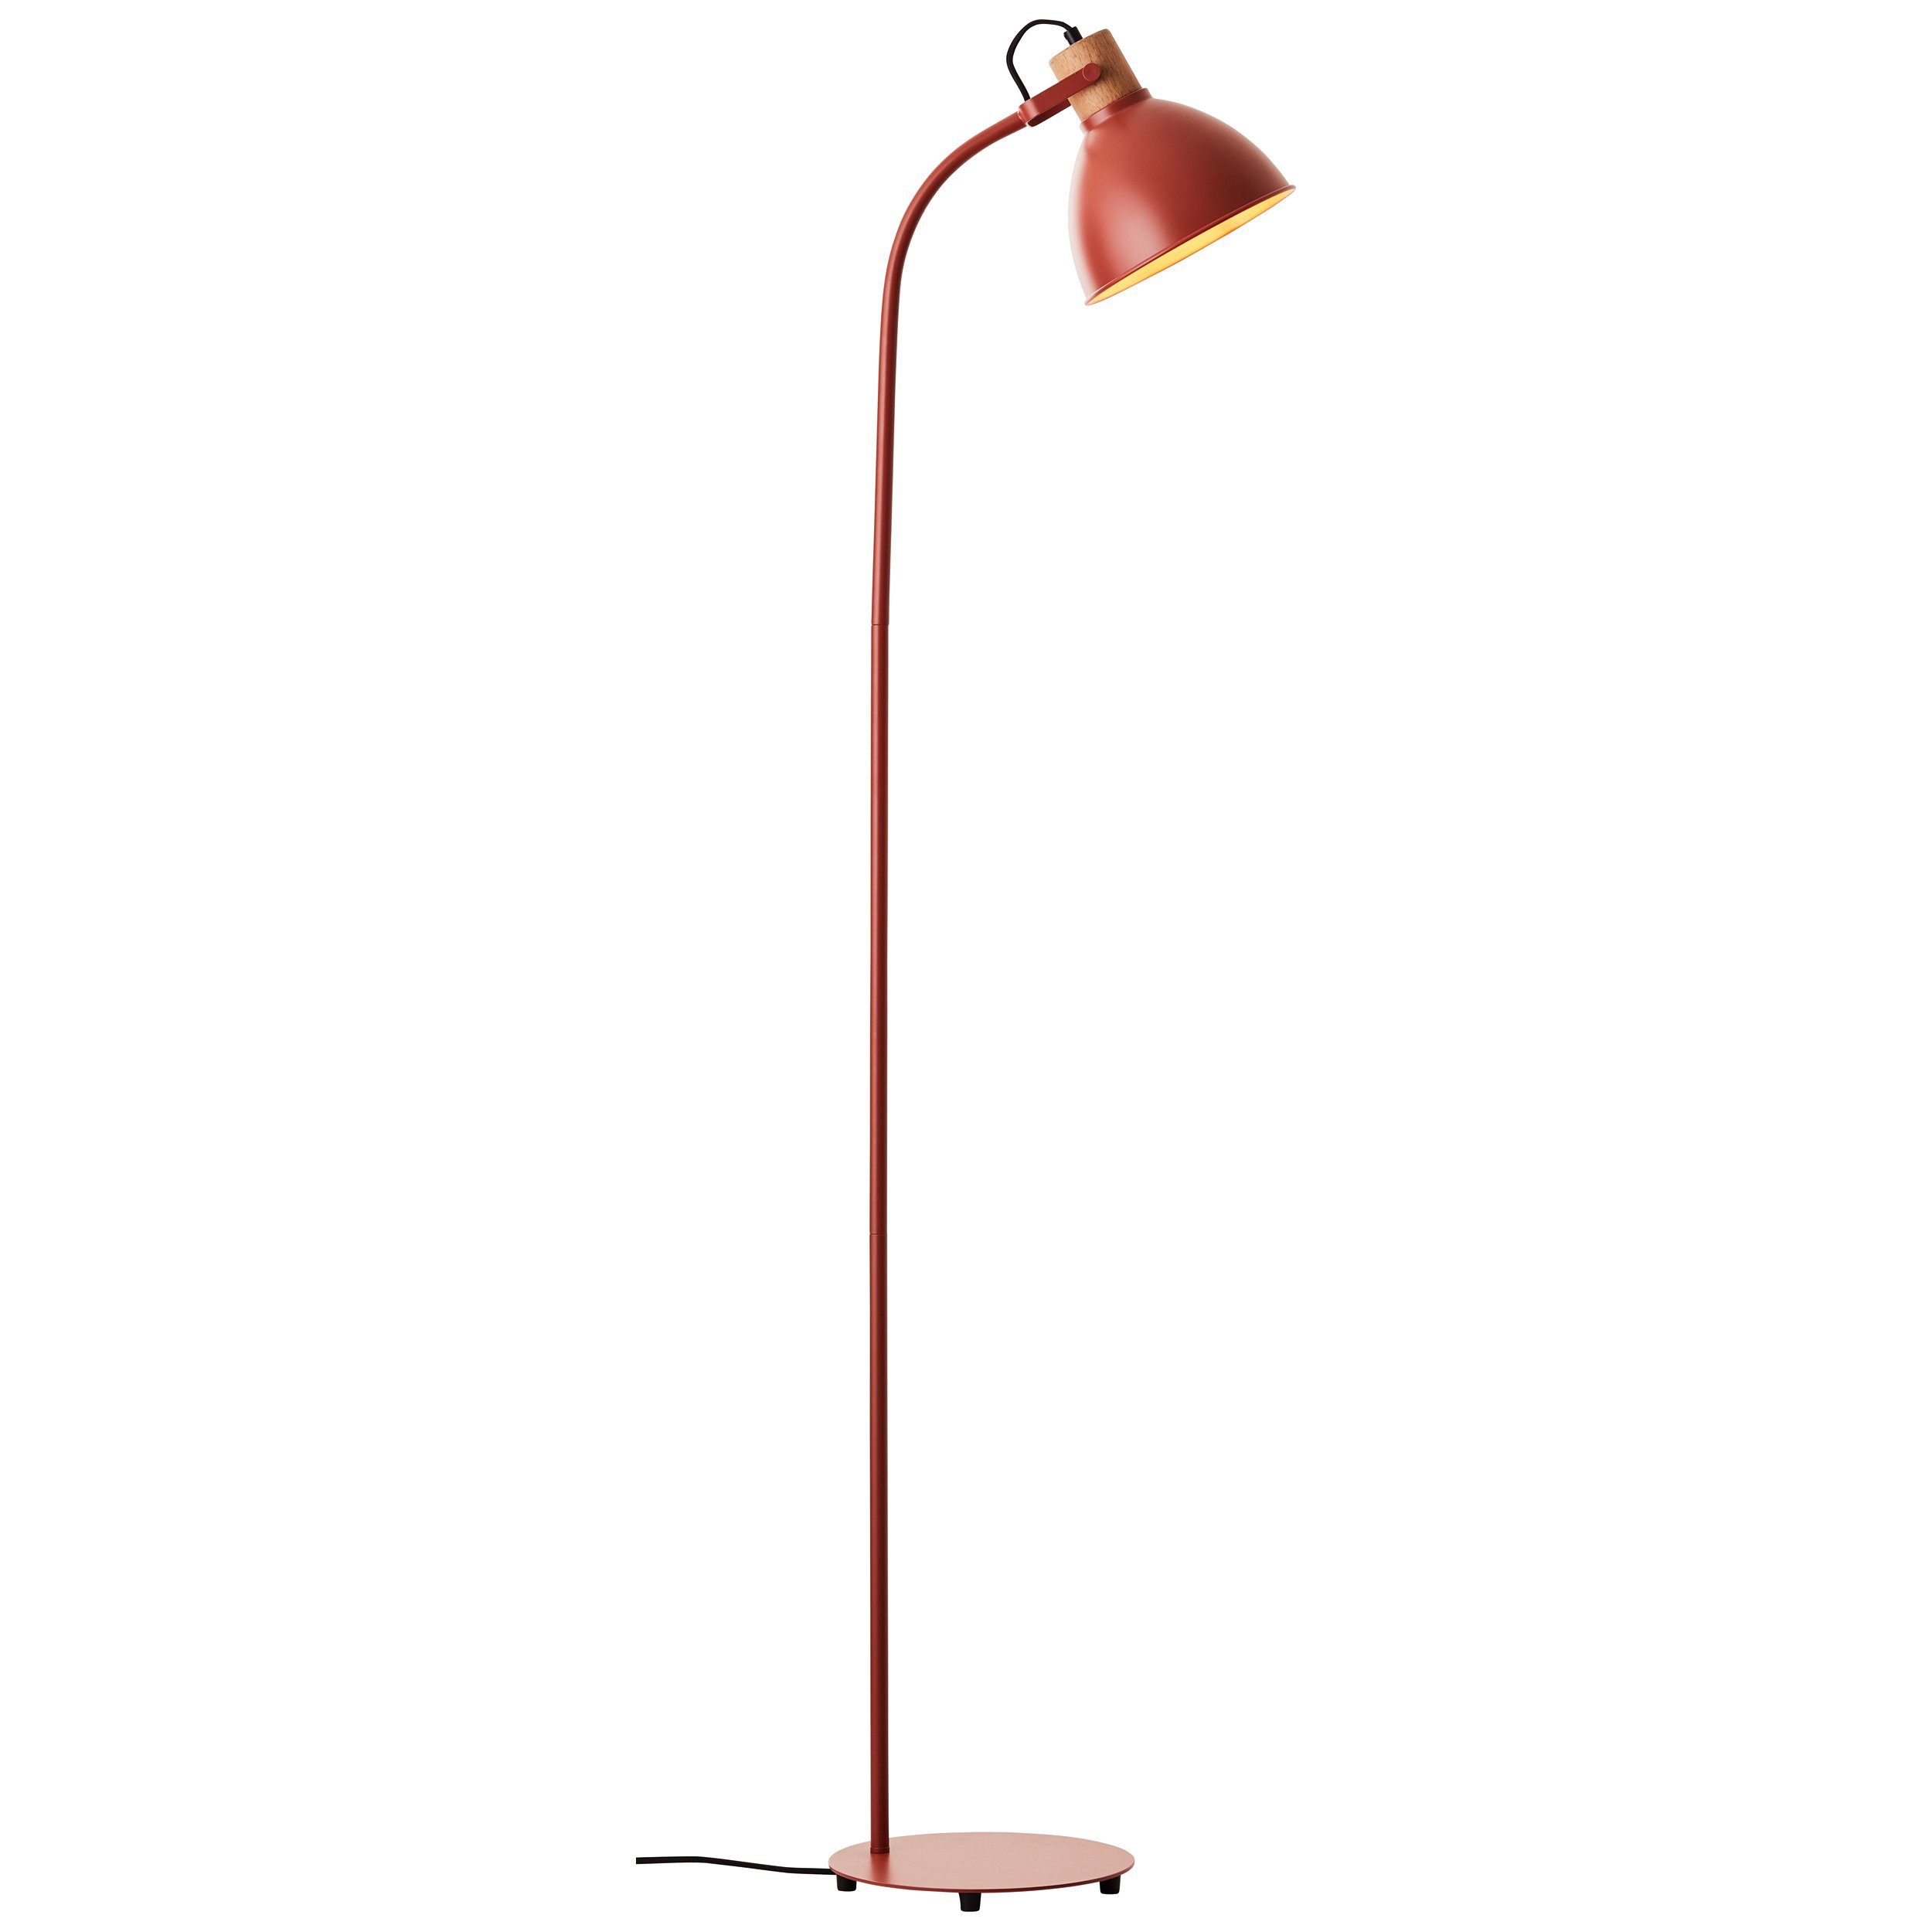 Brilliant Stehlampe 40 Erena A60, 1,5m W Erena Metall/Holz 1x rot Standleuchte rot, E27, Standleuchte 1,5m Fußschalter